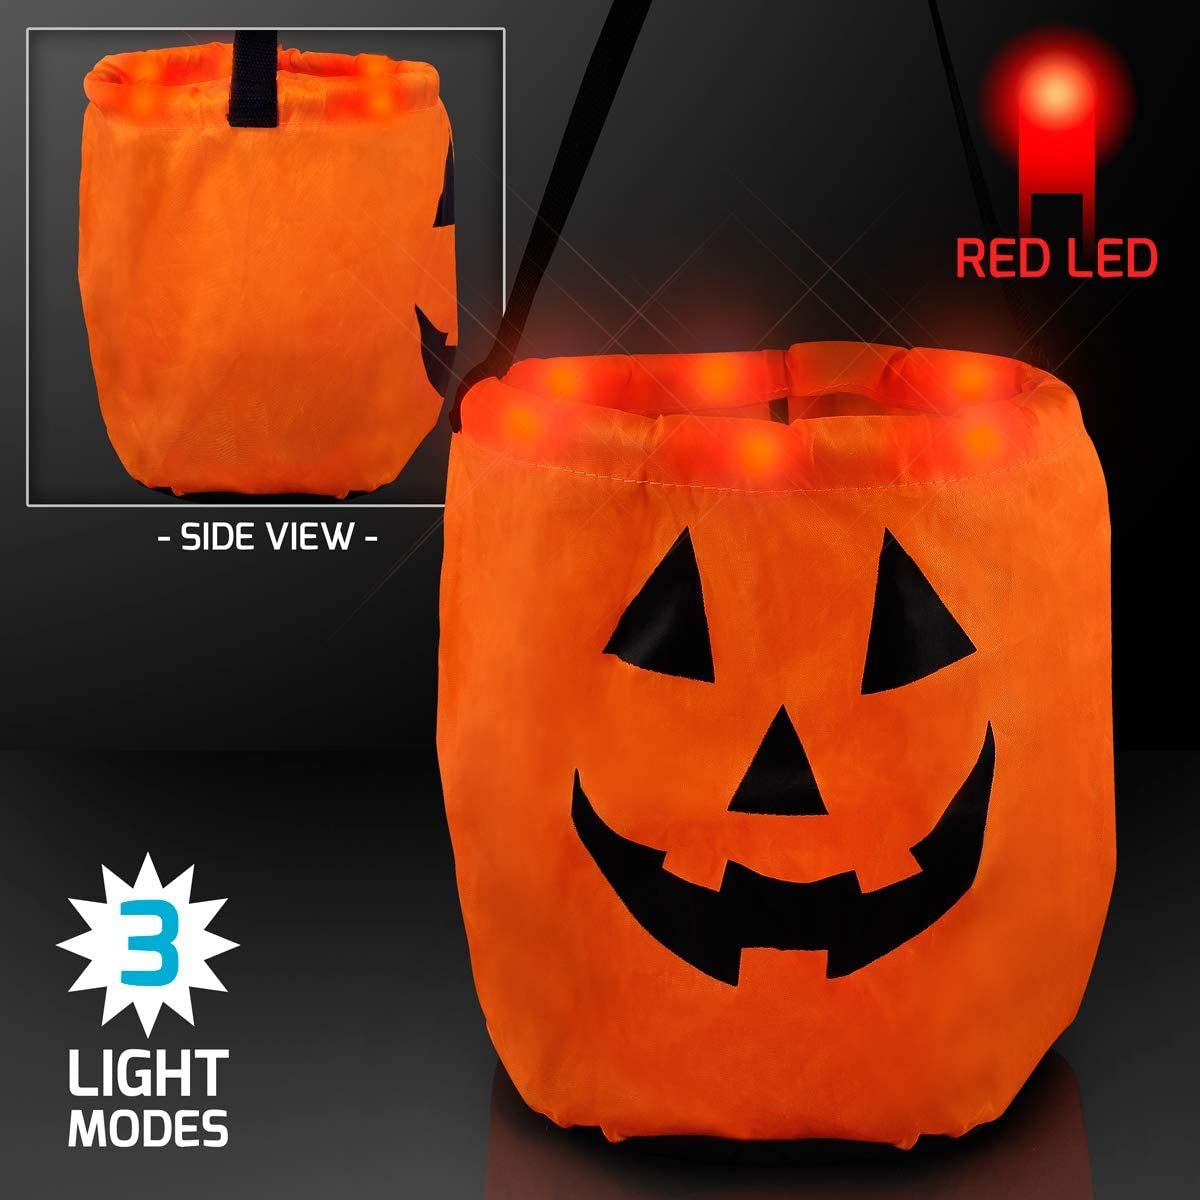 FlashingBlinkyLights Pumpkin Light Up LED Trick-Or-Treat Bag Light Modes